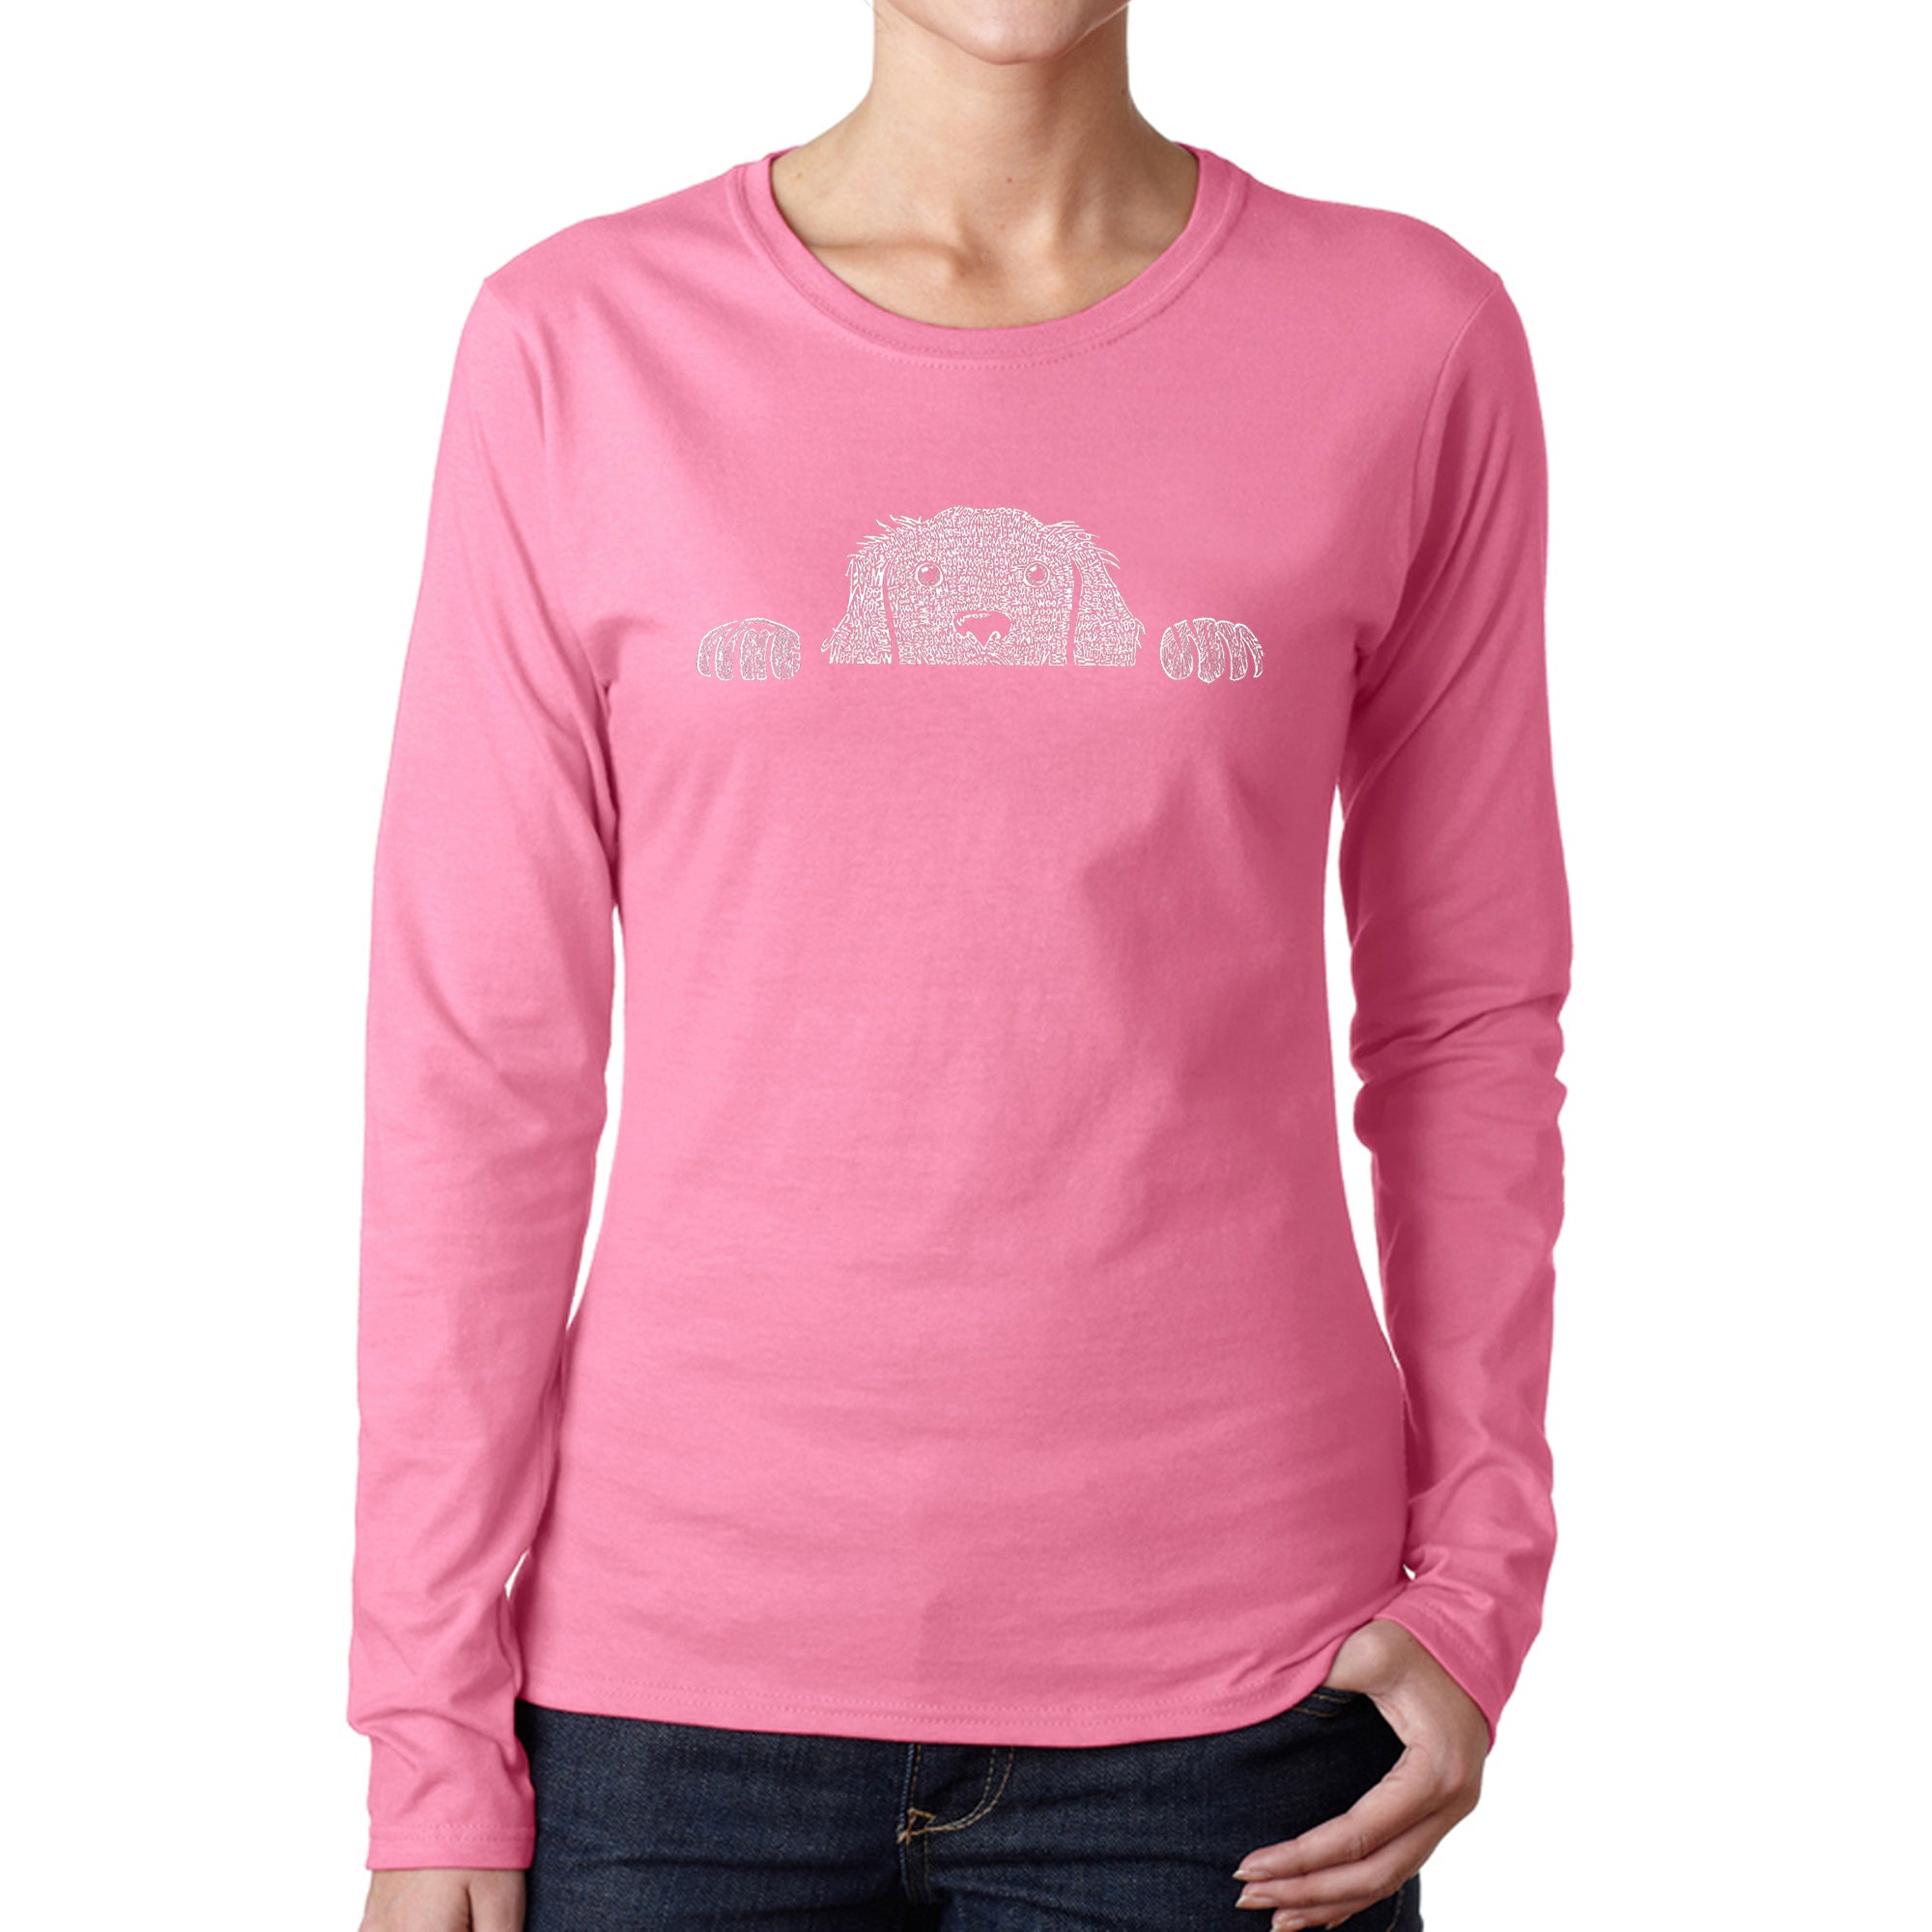 Peeking Dog - Women's Word Art Long Sleeve T-Shirt - Pink - Large